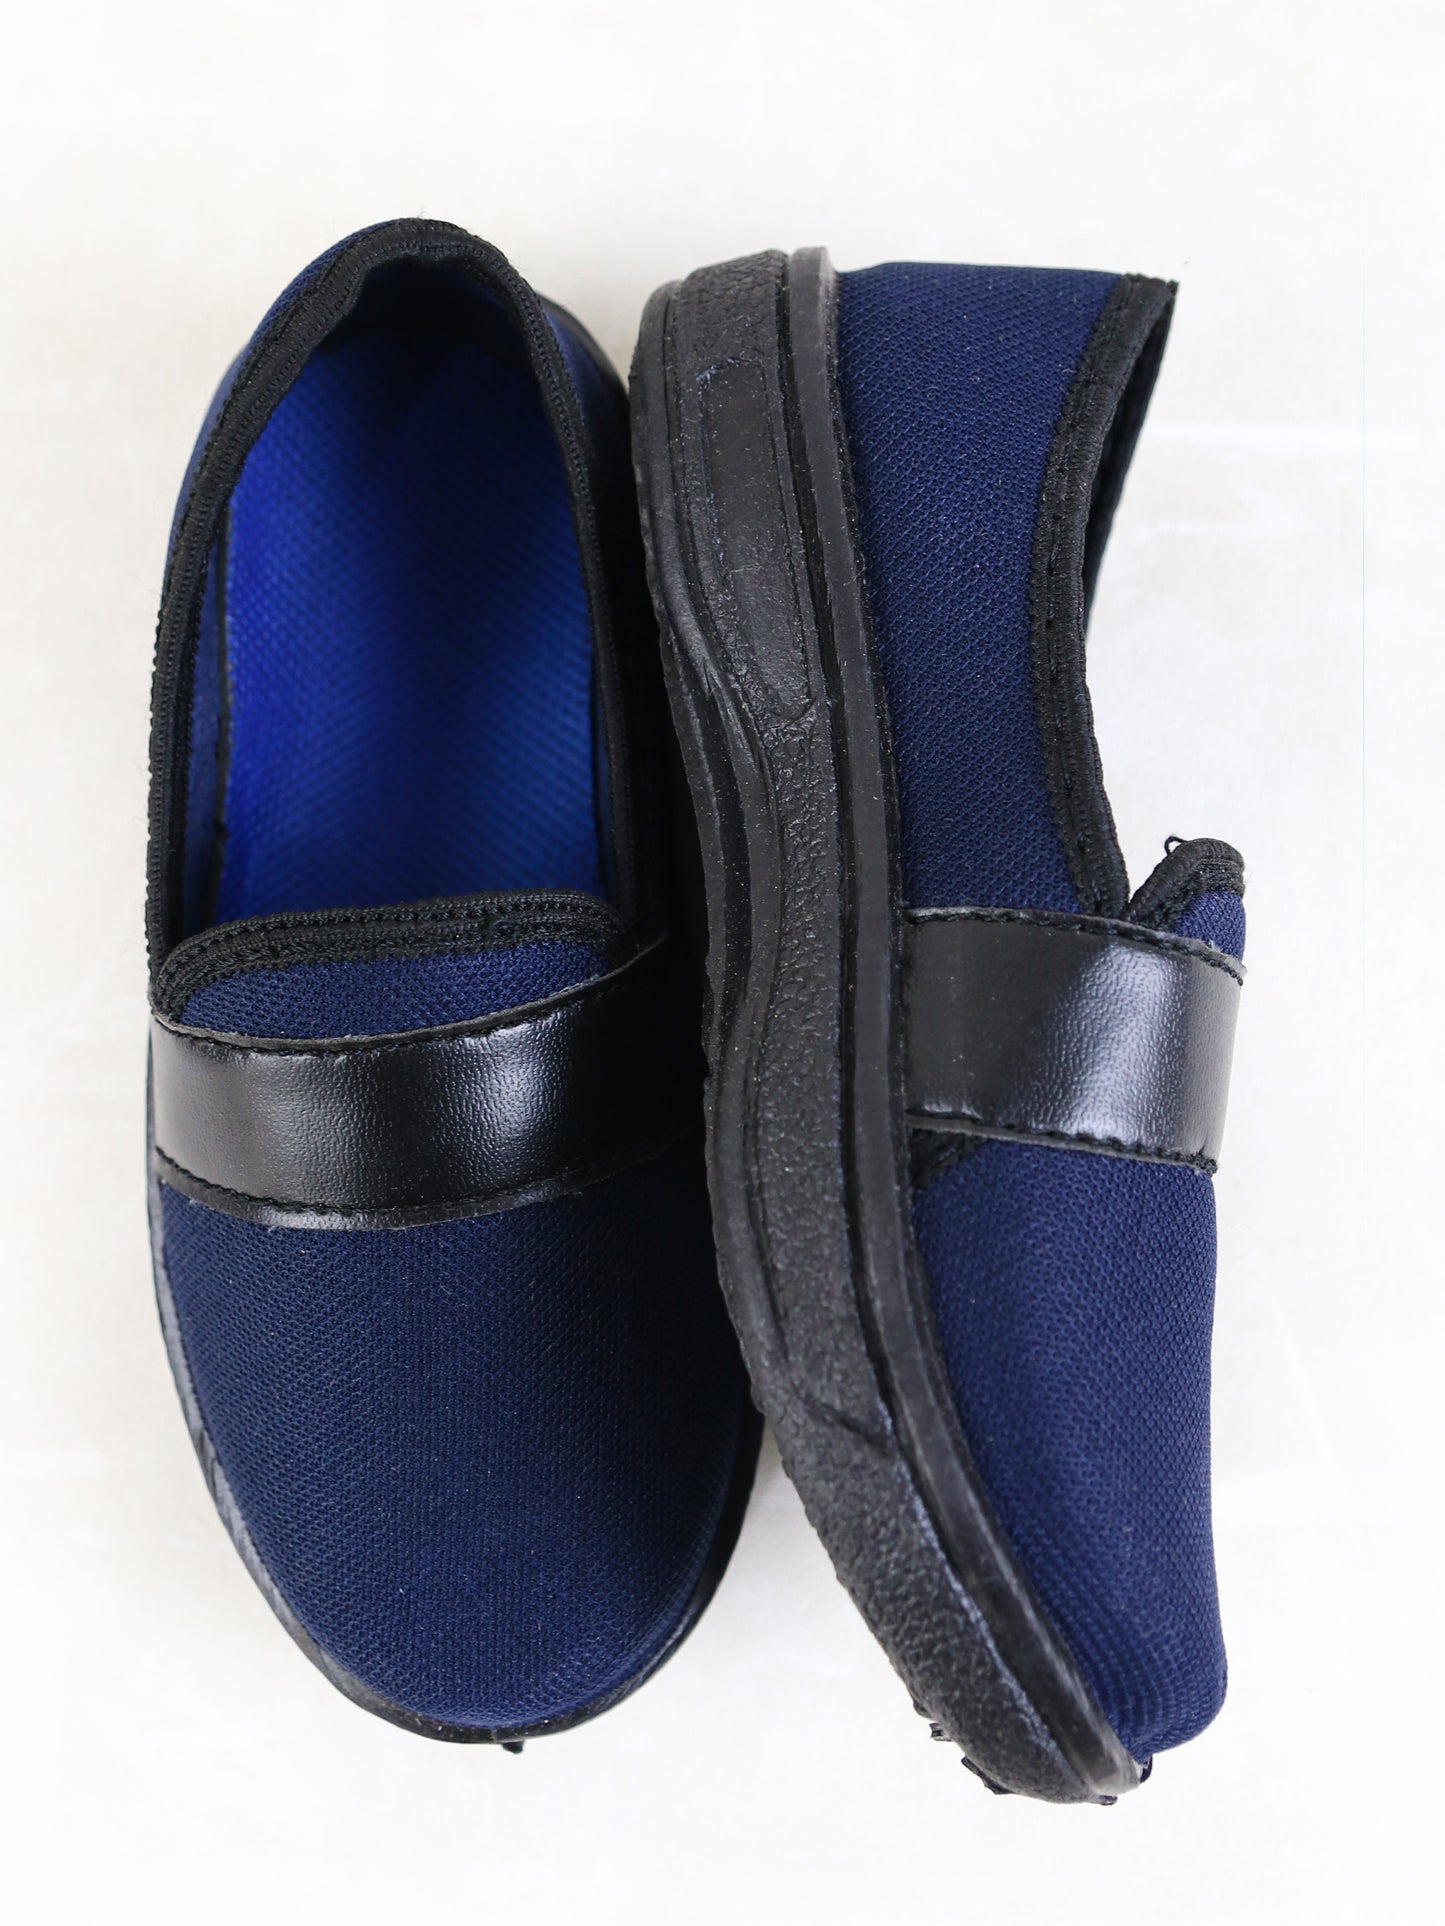 BS56 Boys Slip-On Shoes 5Yrs - 8Yrs Blue